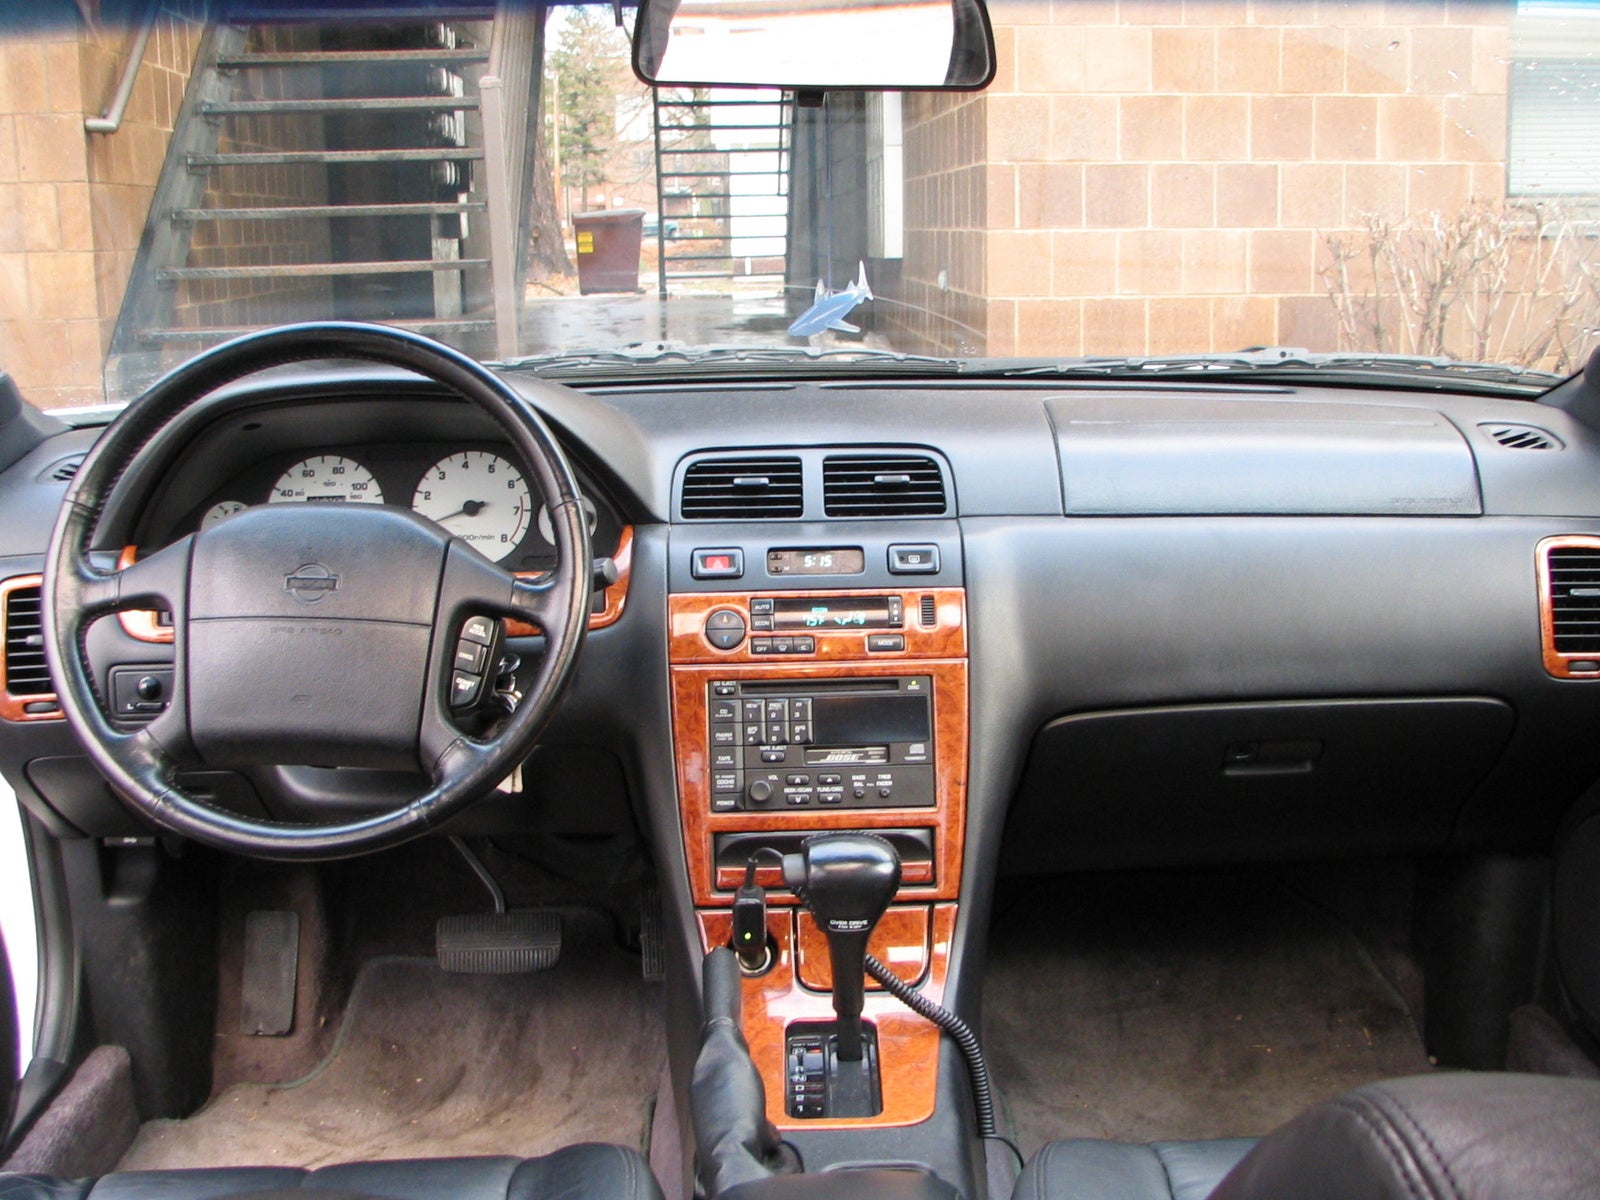 1996 Nissan maxima interior #10